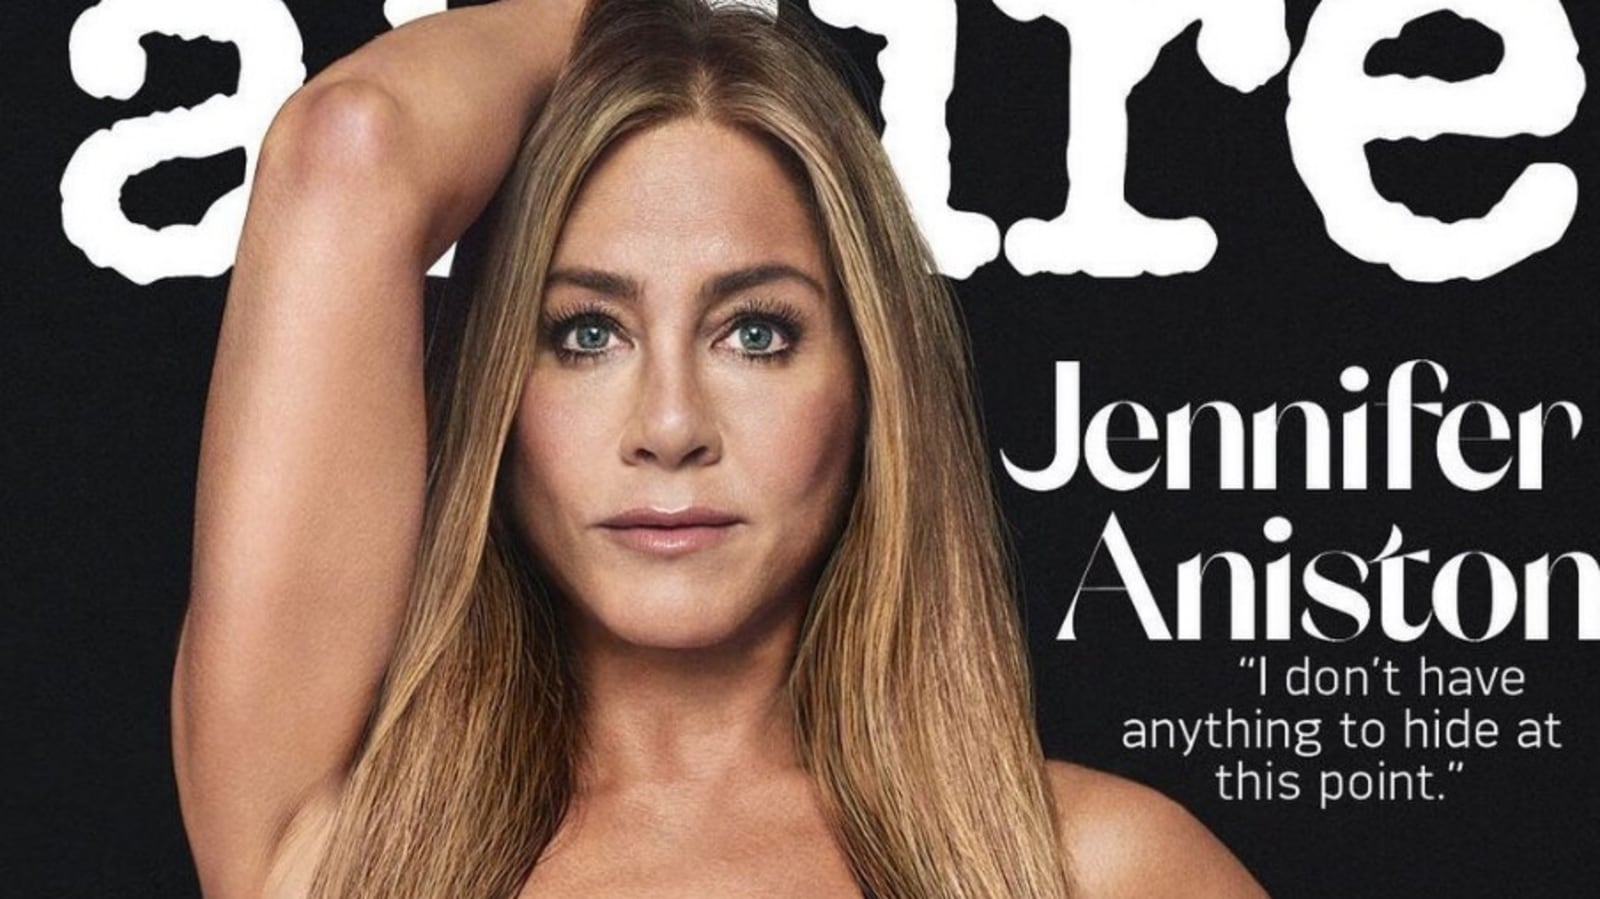 Jennifer Aniston stuns on bold magazine cover, recalls lies around